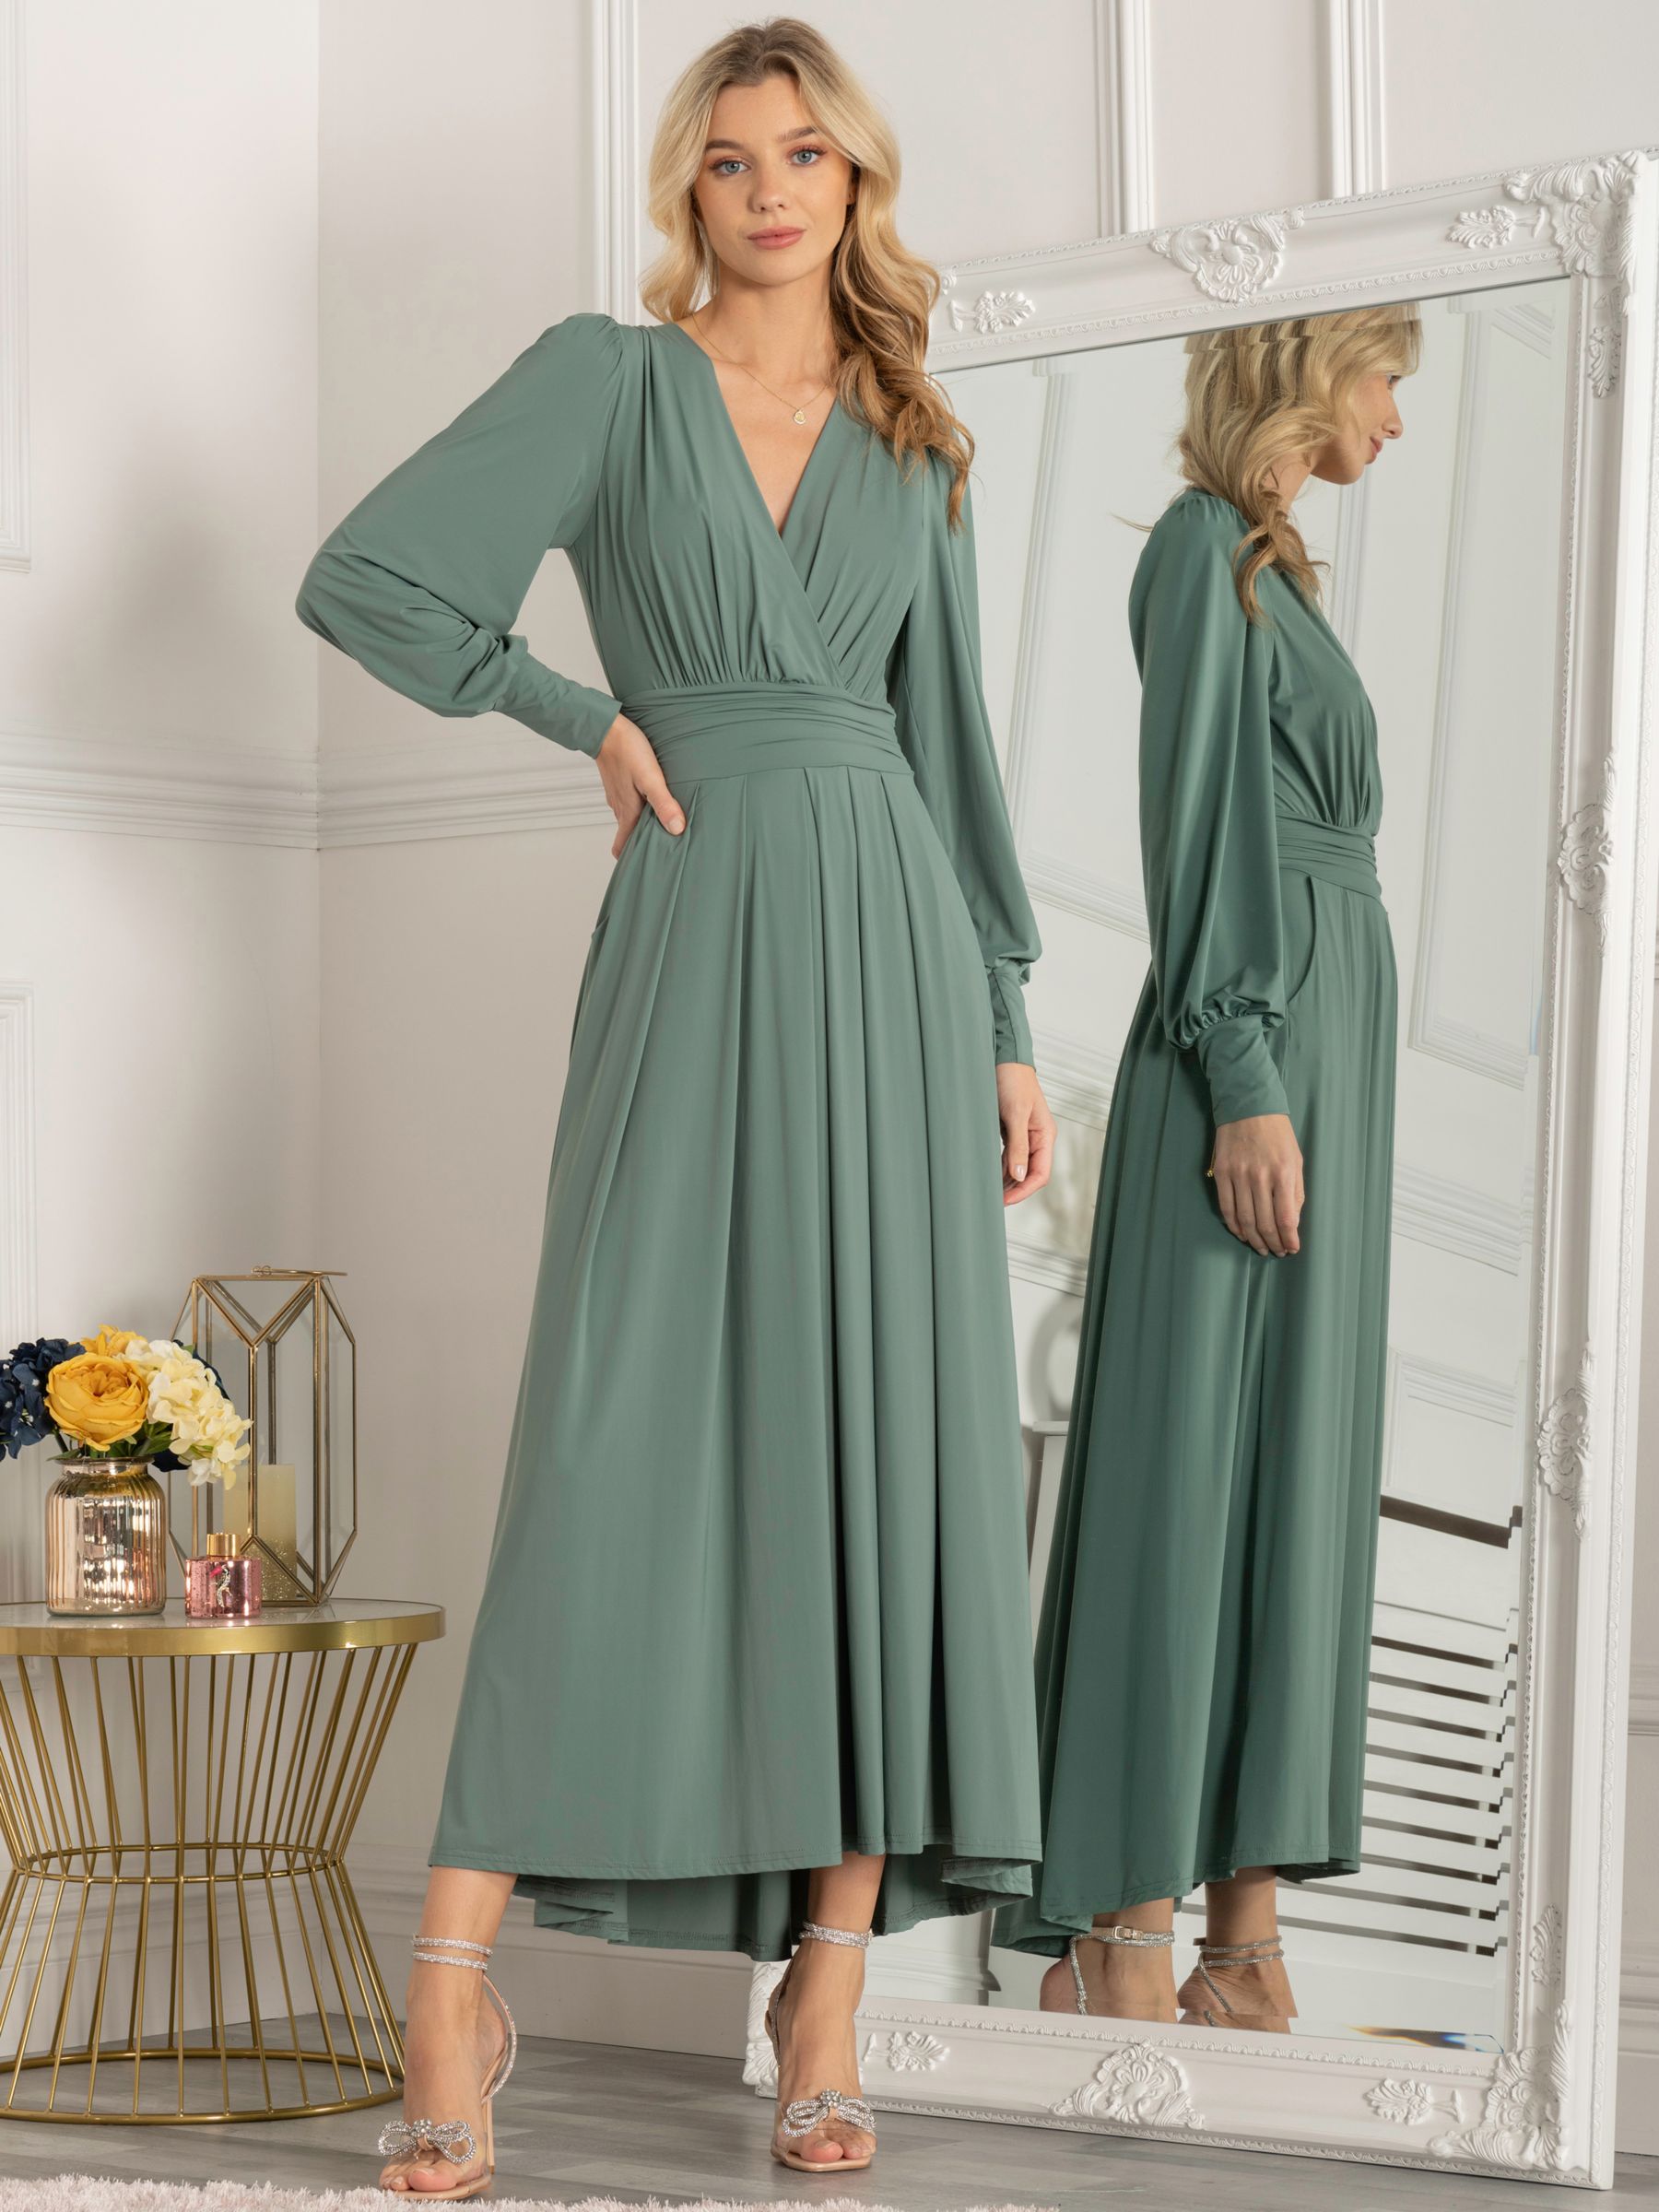 Winter Luxury Hunter Green Ruffled Kimono Dress For Pregnant Women